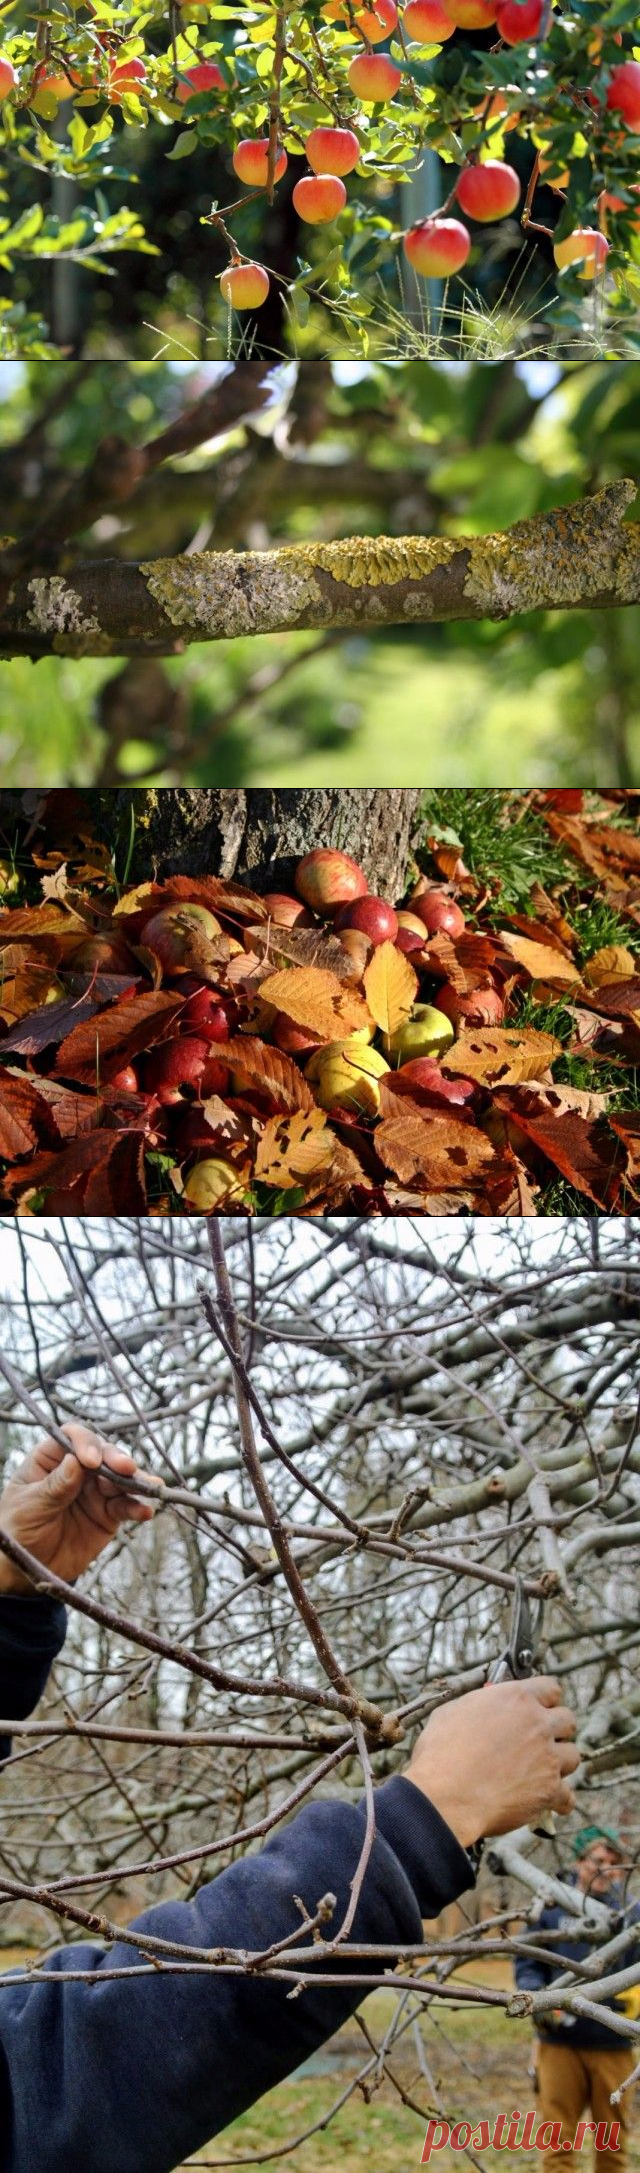 Осенний уход за яблонями по правилам